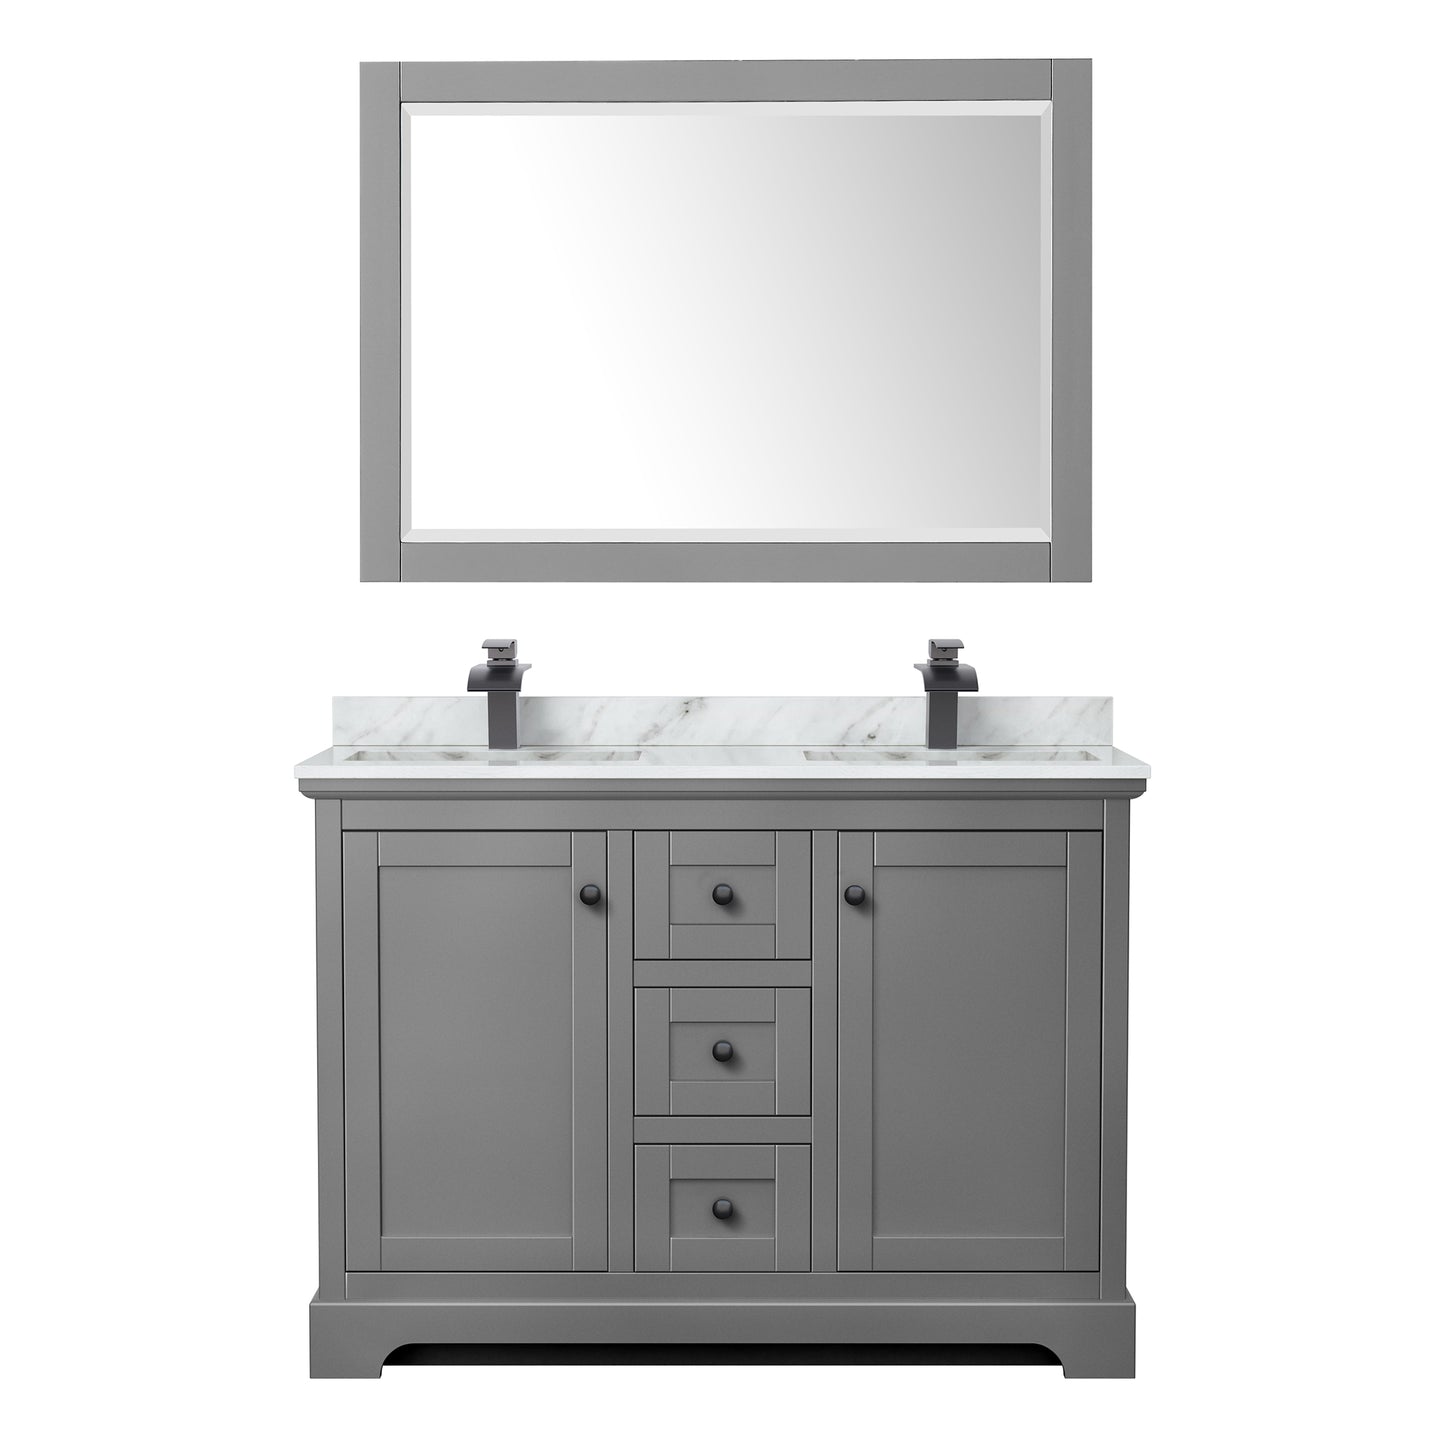 Wyndham Avery 48 Inch Double Bathroom Vanity White Carrara Marble Countertop, Undermount Square Sinks in Matte Black Trim with 46 Inch Mirror - Luxe Bathroom Vanities